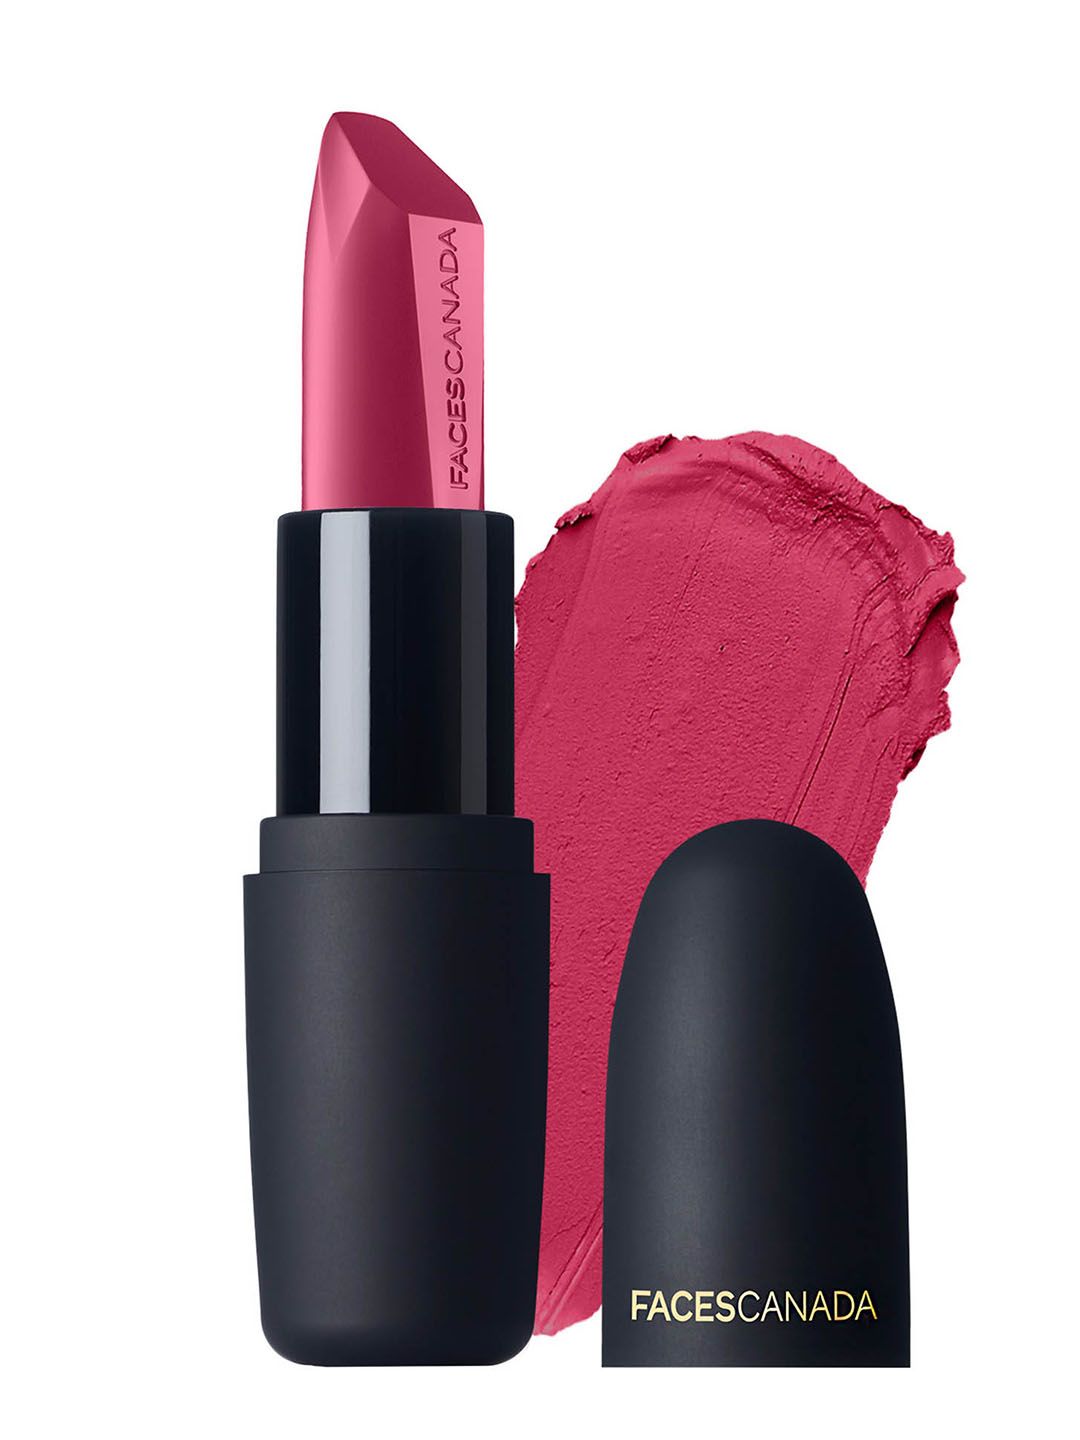 FACES CANADA Weightless Matte Finish Lipstick Blazing Blush 20 4g Price in India